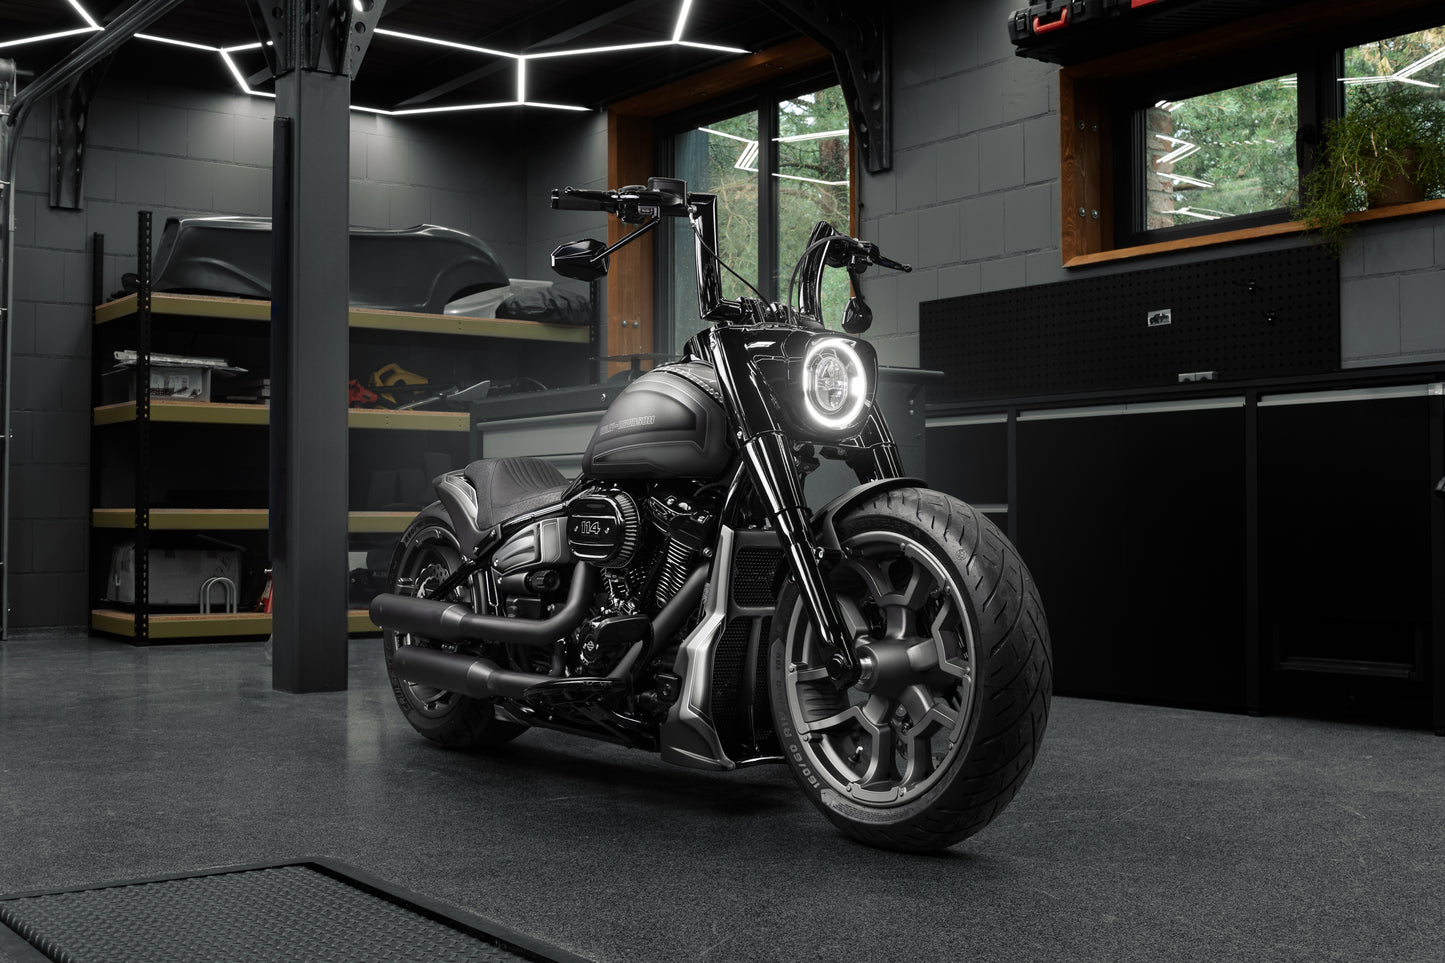 Harley Davidson motorcycle with Killer Custom "Killer Bull" fat handlebars from the front in a modern bike shop